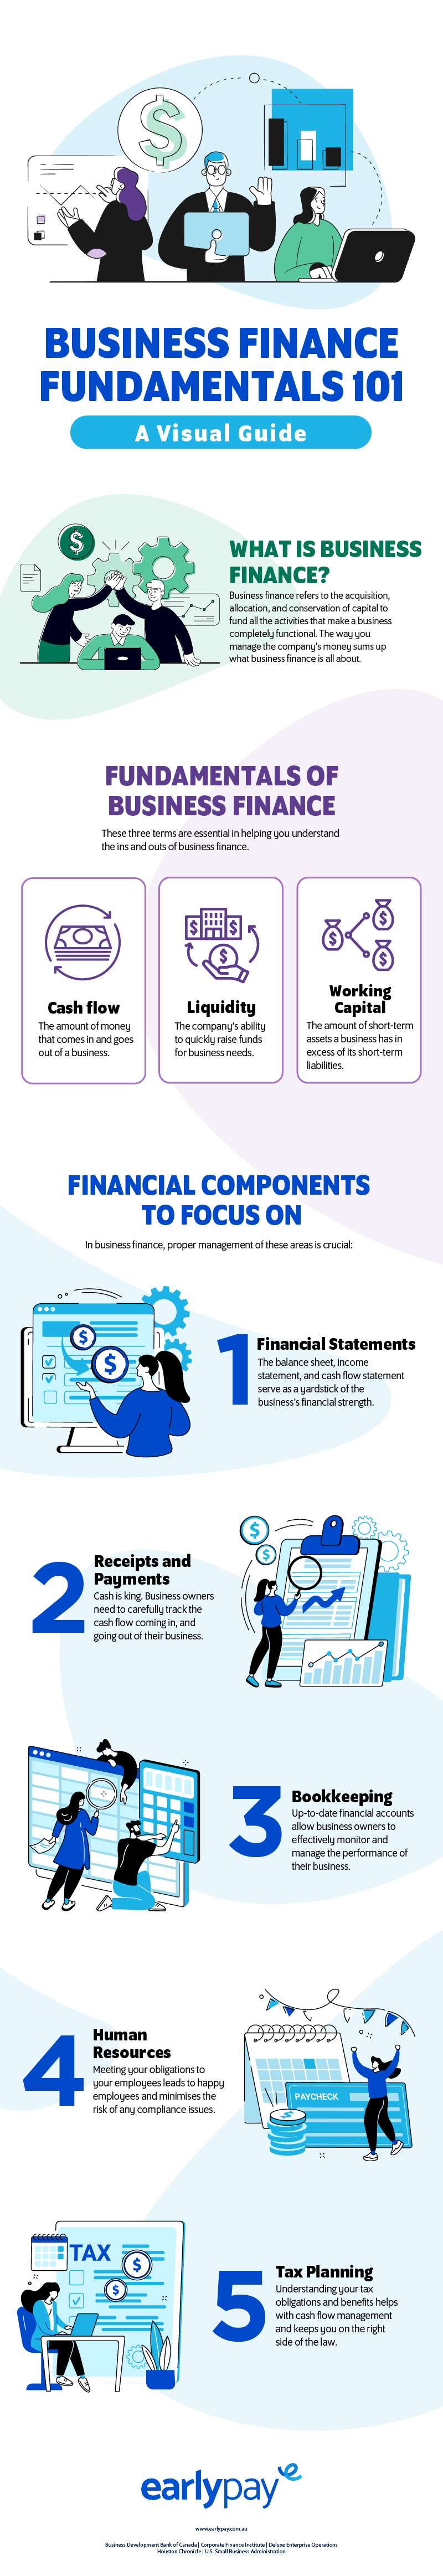 business-finance-fundamentals-101-a-visual-guide